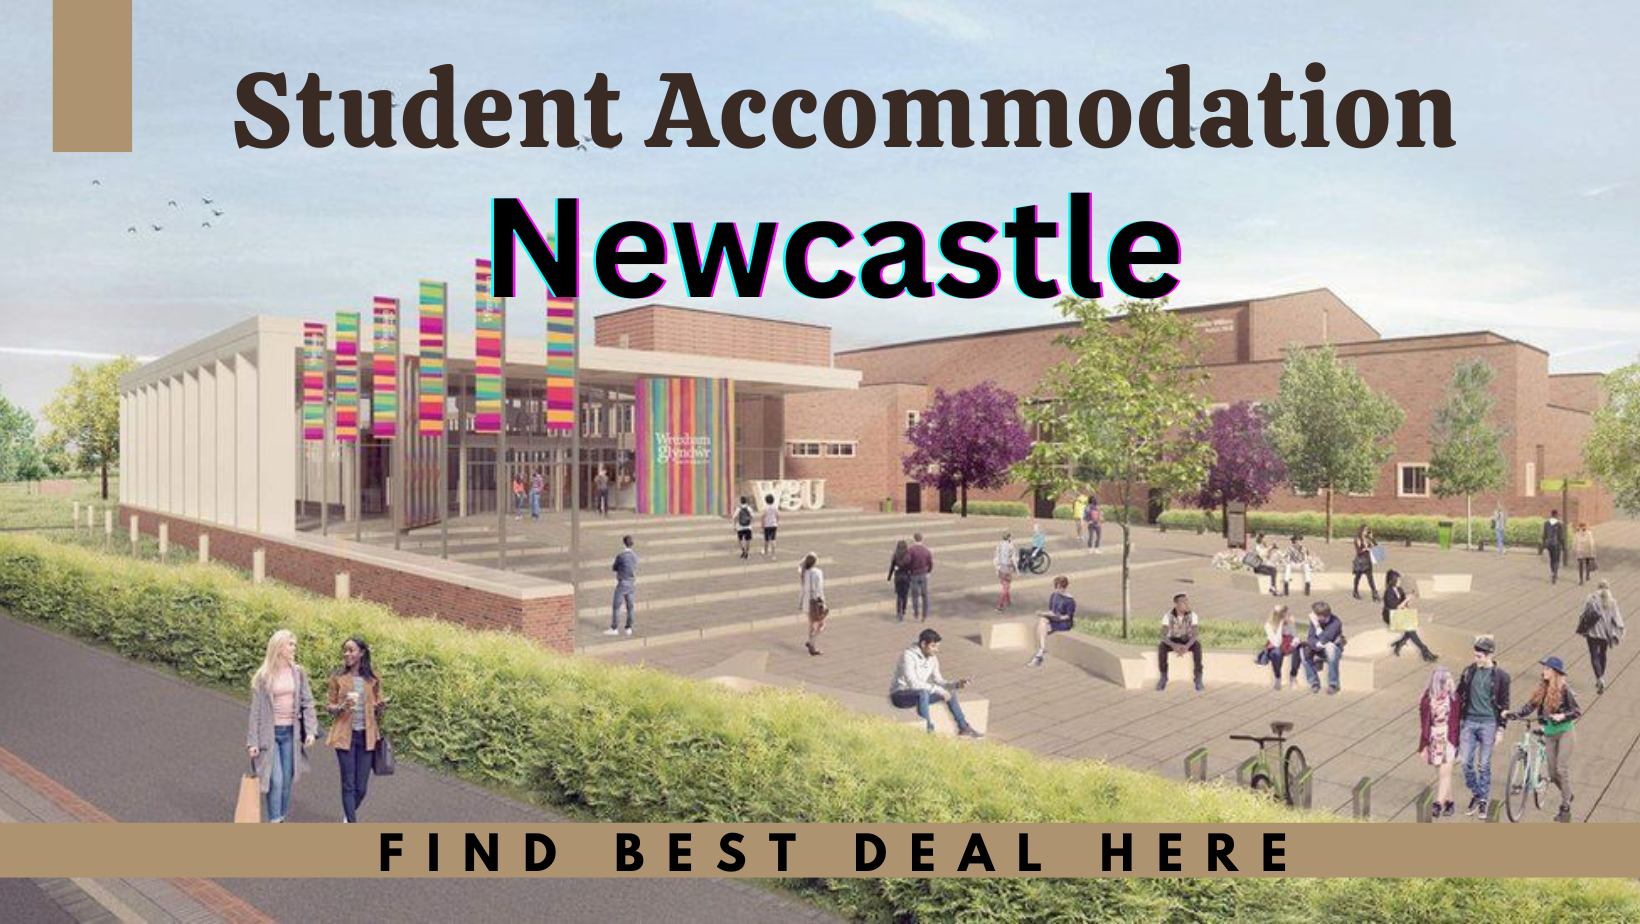 Student Accommodation Newcastle, Student Apartments Newcastle, Student Housing Newcastle, Student Rooms Newcastle